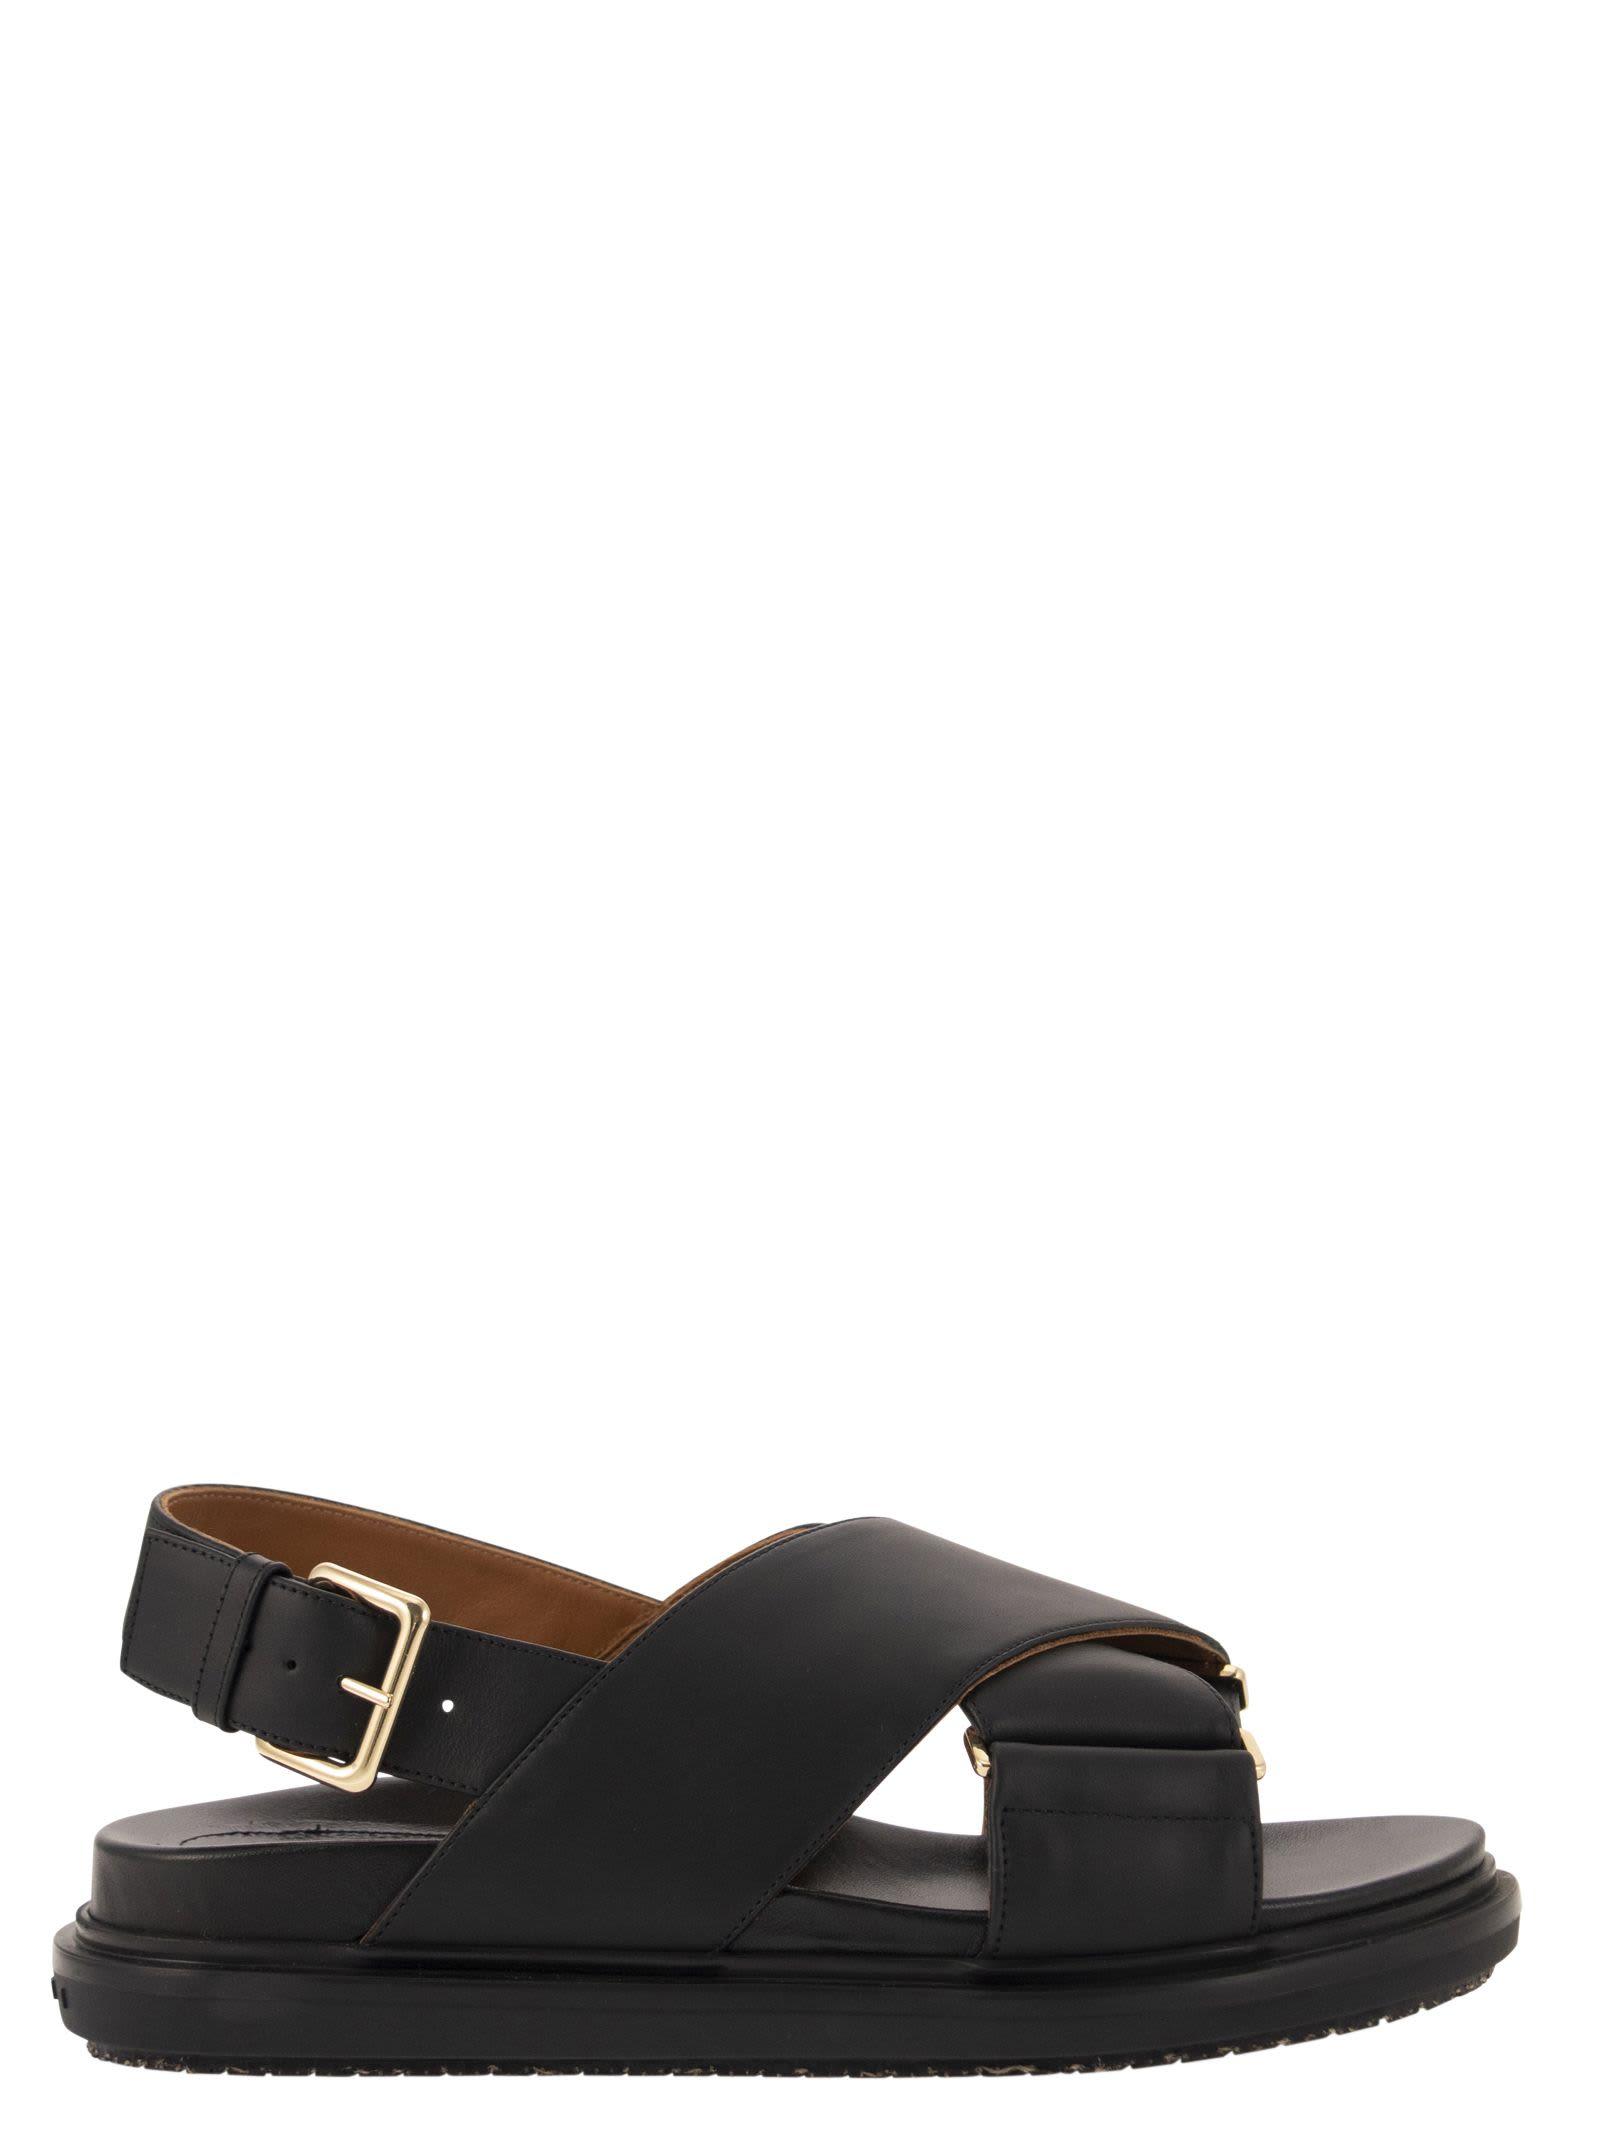 Marni Fussbett Leather Sandal in Black | Lyst